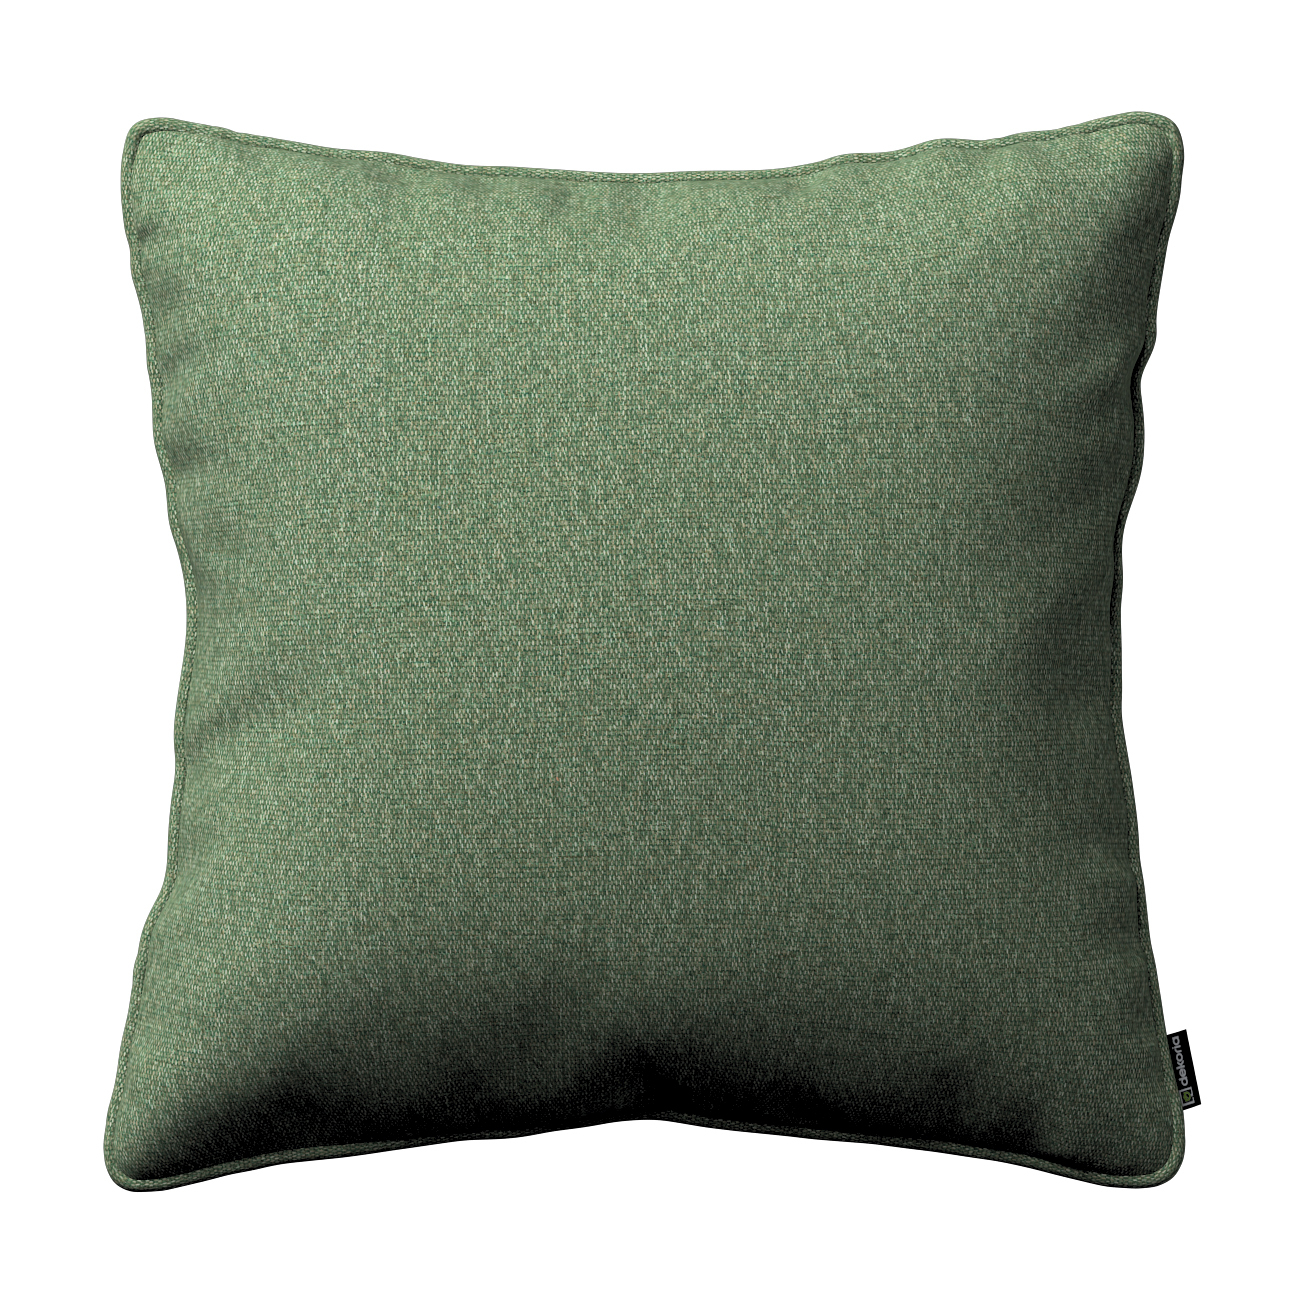 Kissenhülle Gabi mit Paspel, grün, 45 x 45 cm, Amsterdam (704-44) günstig online kaufen